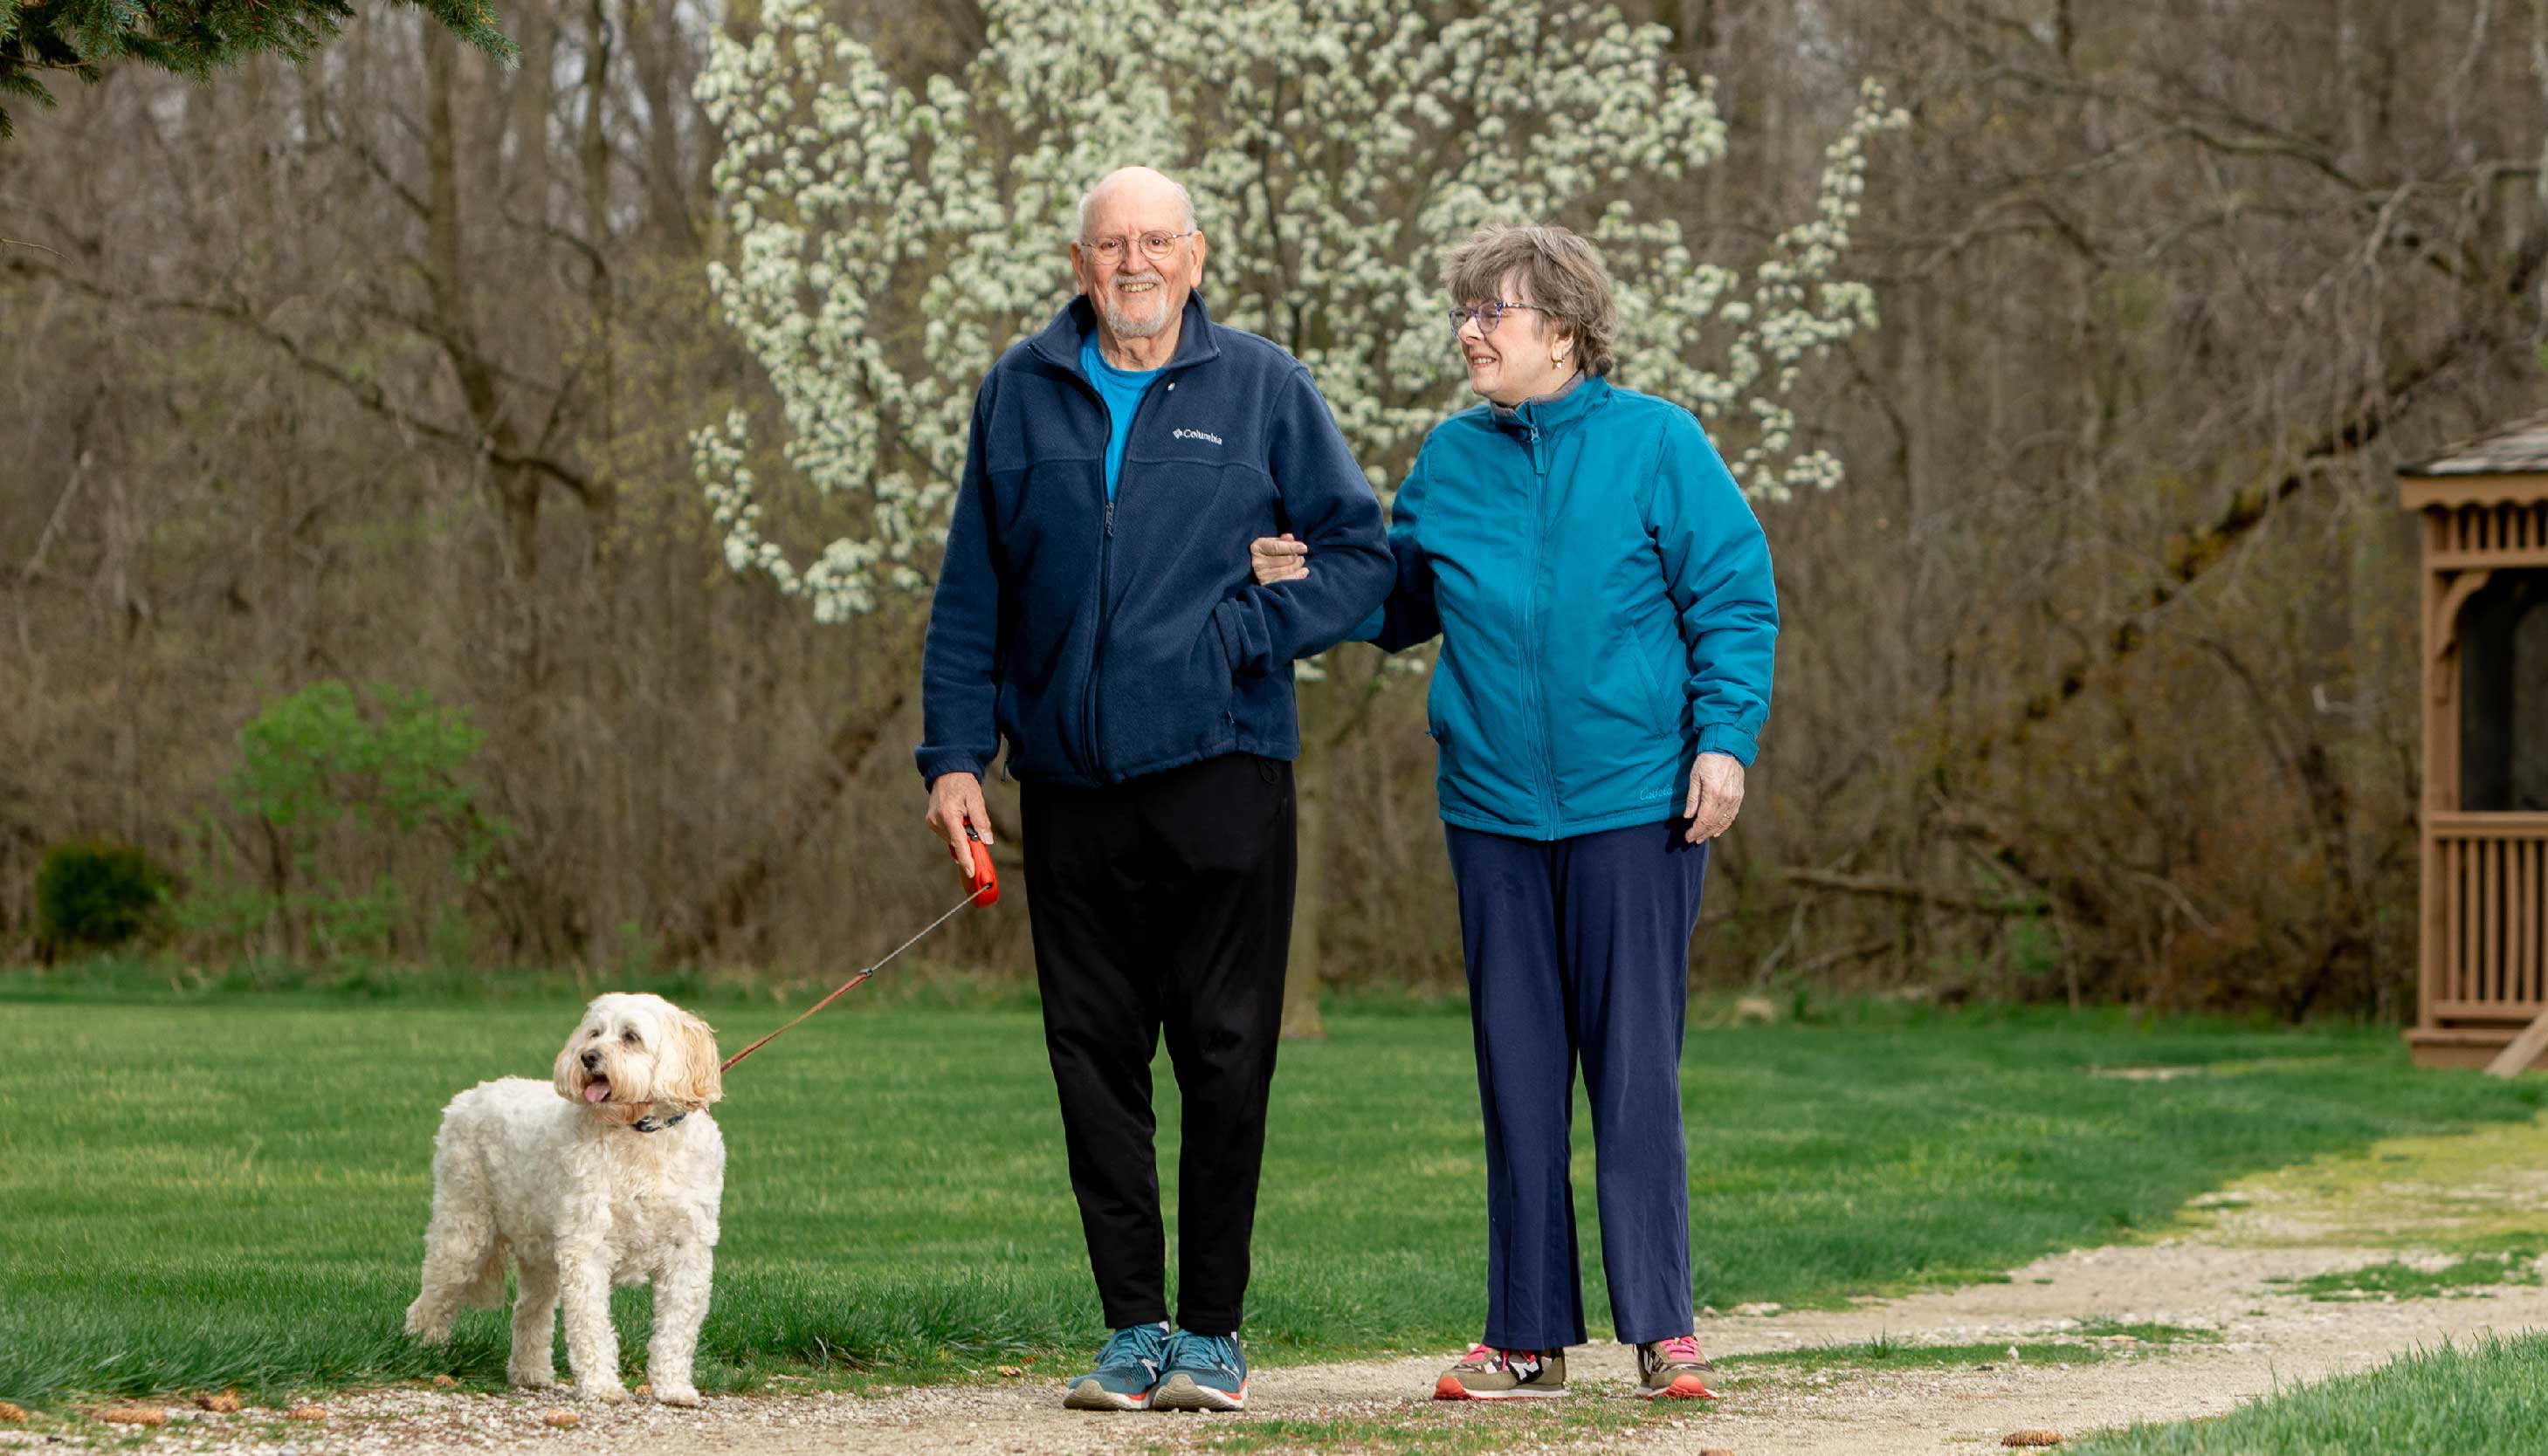 Otterbein SeniorLife residents Jim and Carolyn R. walking their dog